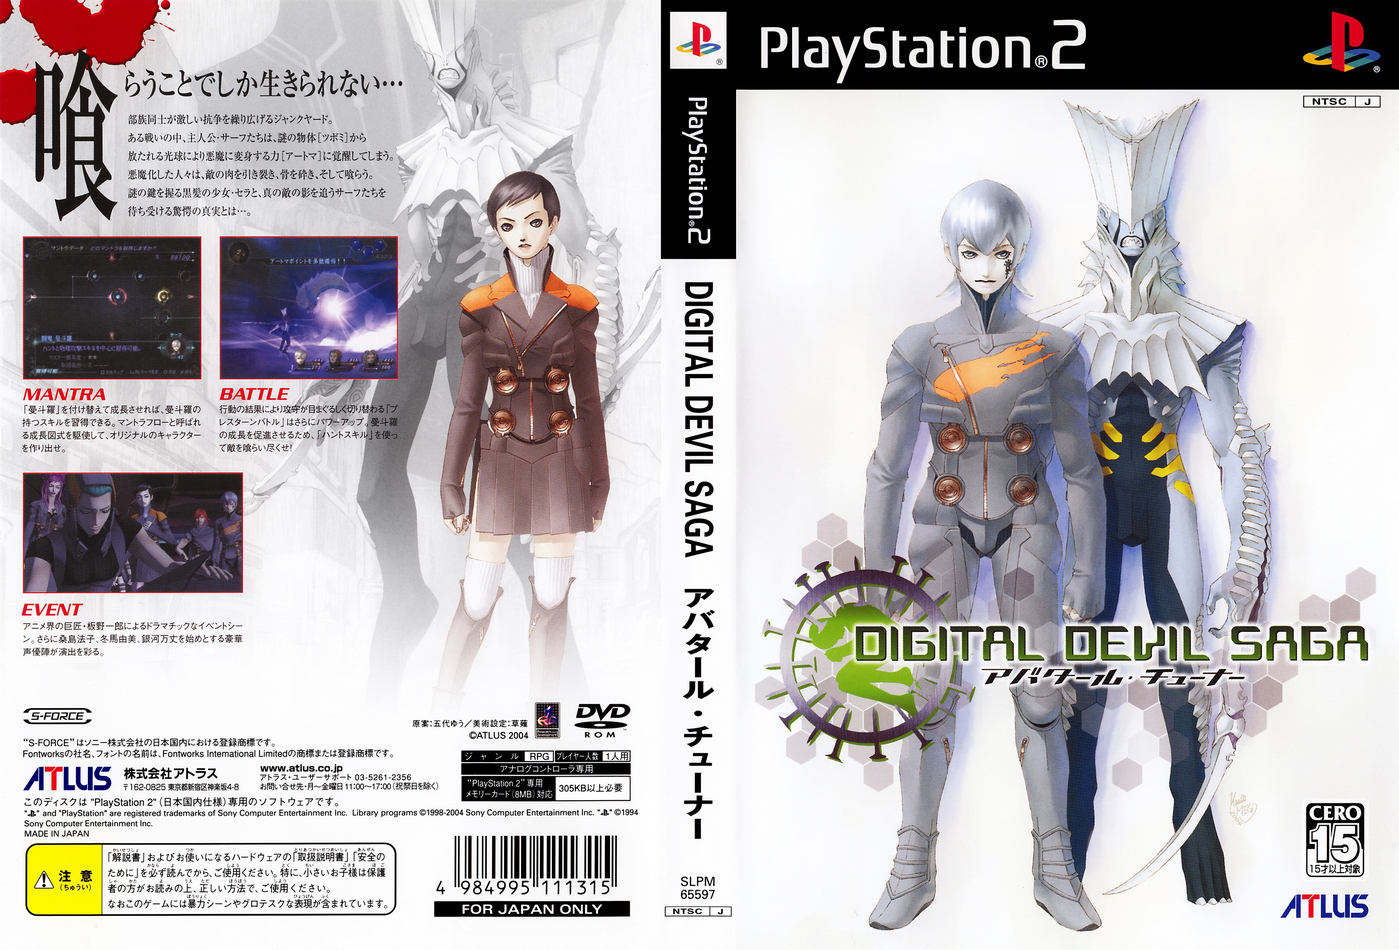 DIGITAL DEVIL SAGA アバタール・チューナー』PS2アーカイブスに登場 